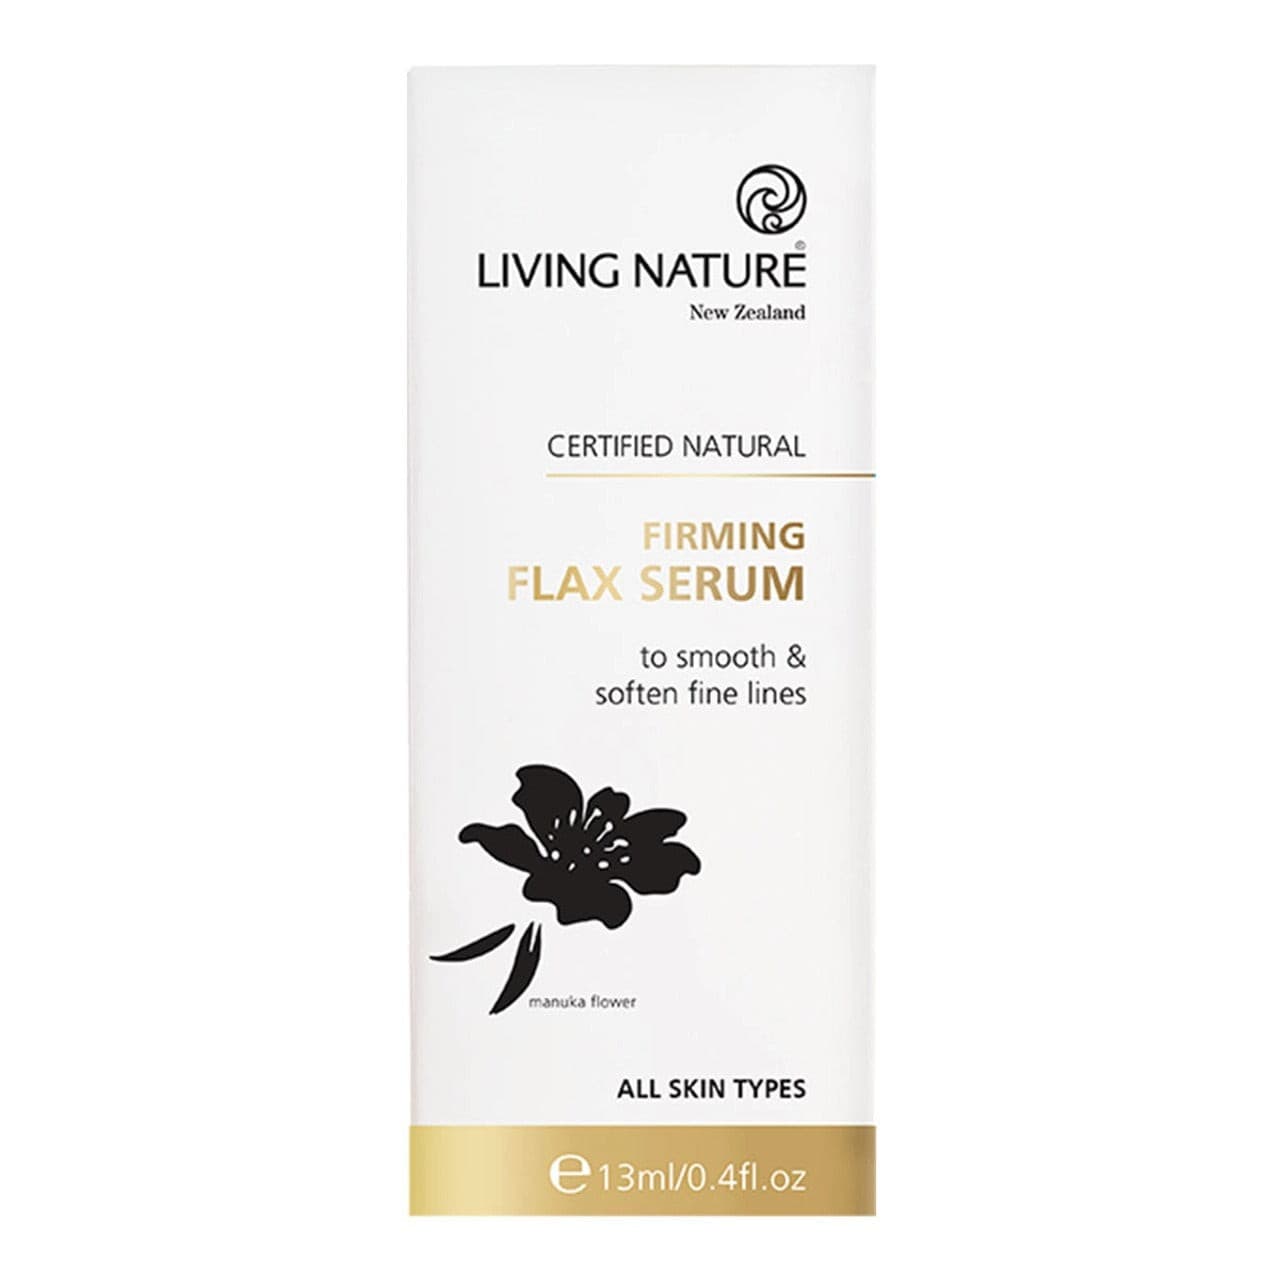 Living Nature Firming Flax Serum 13ml.